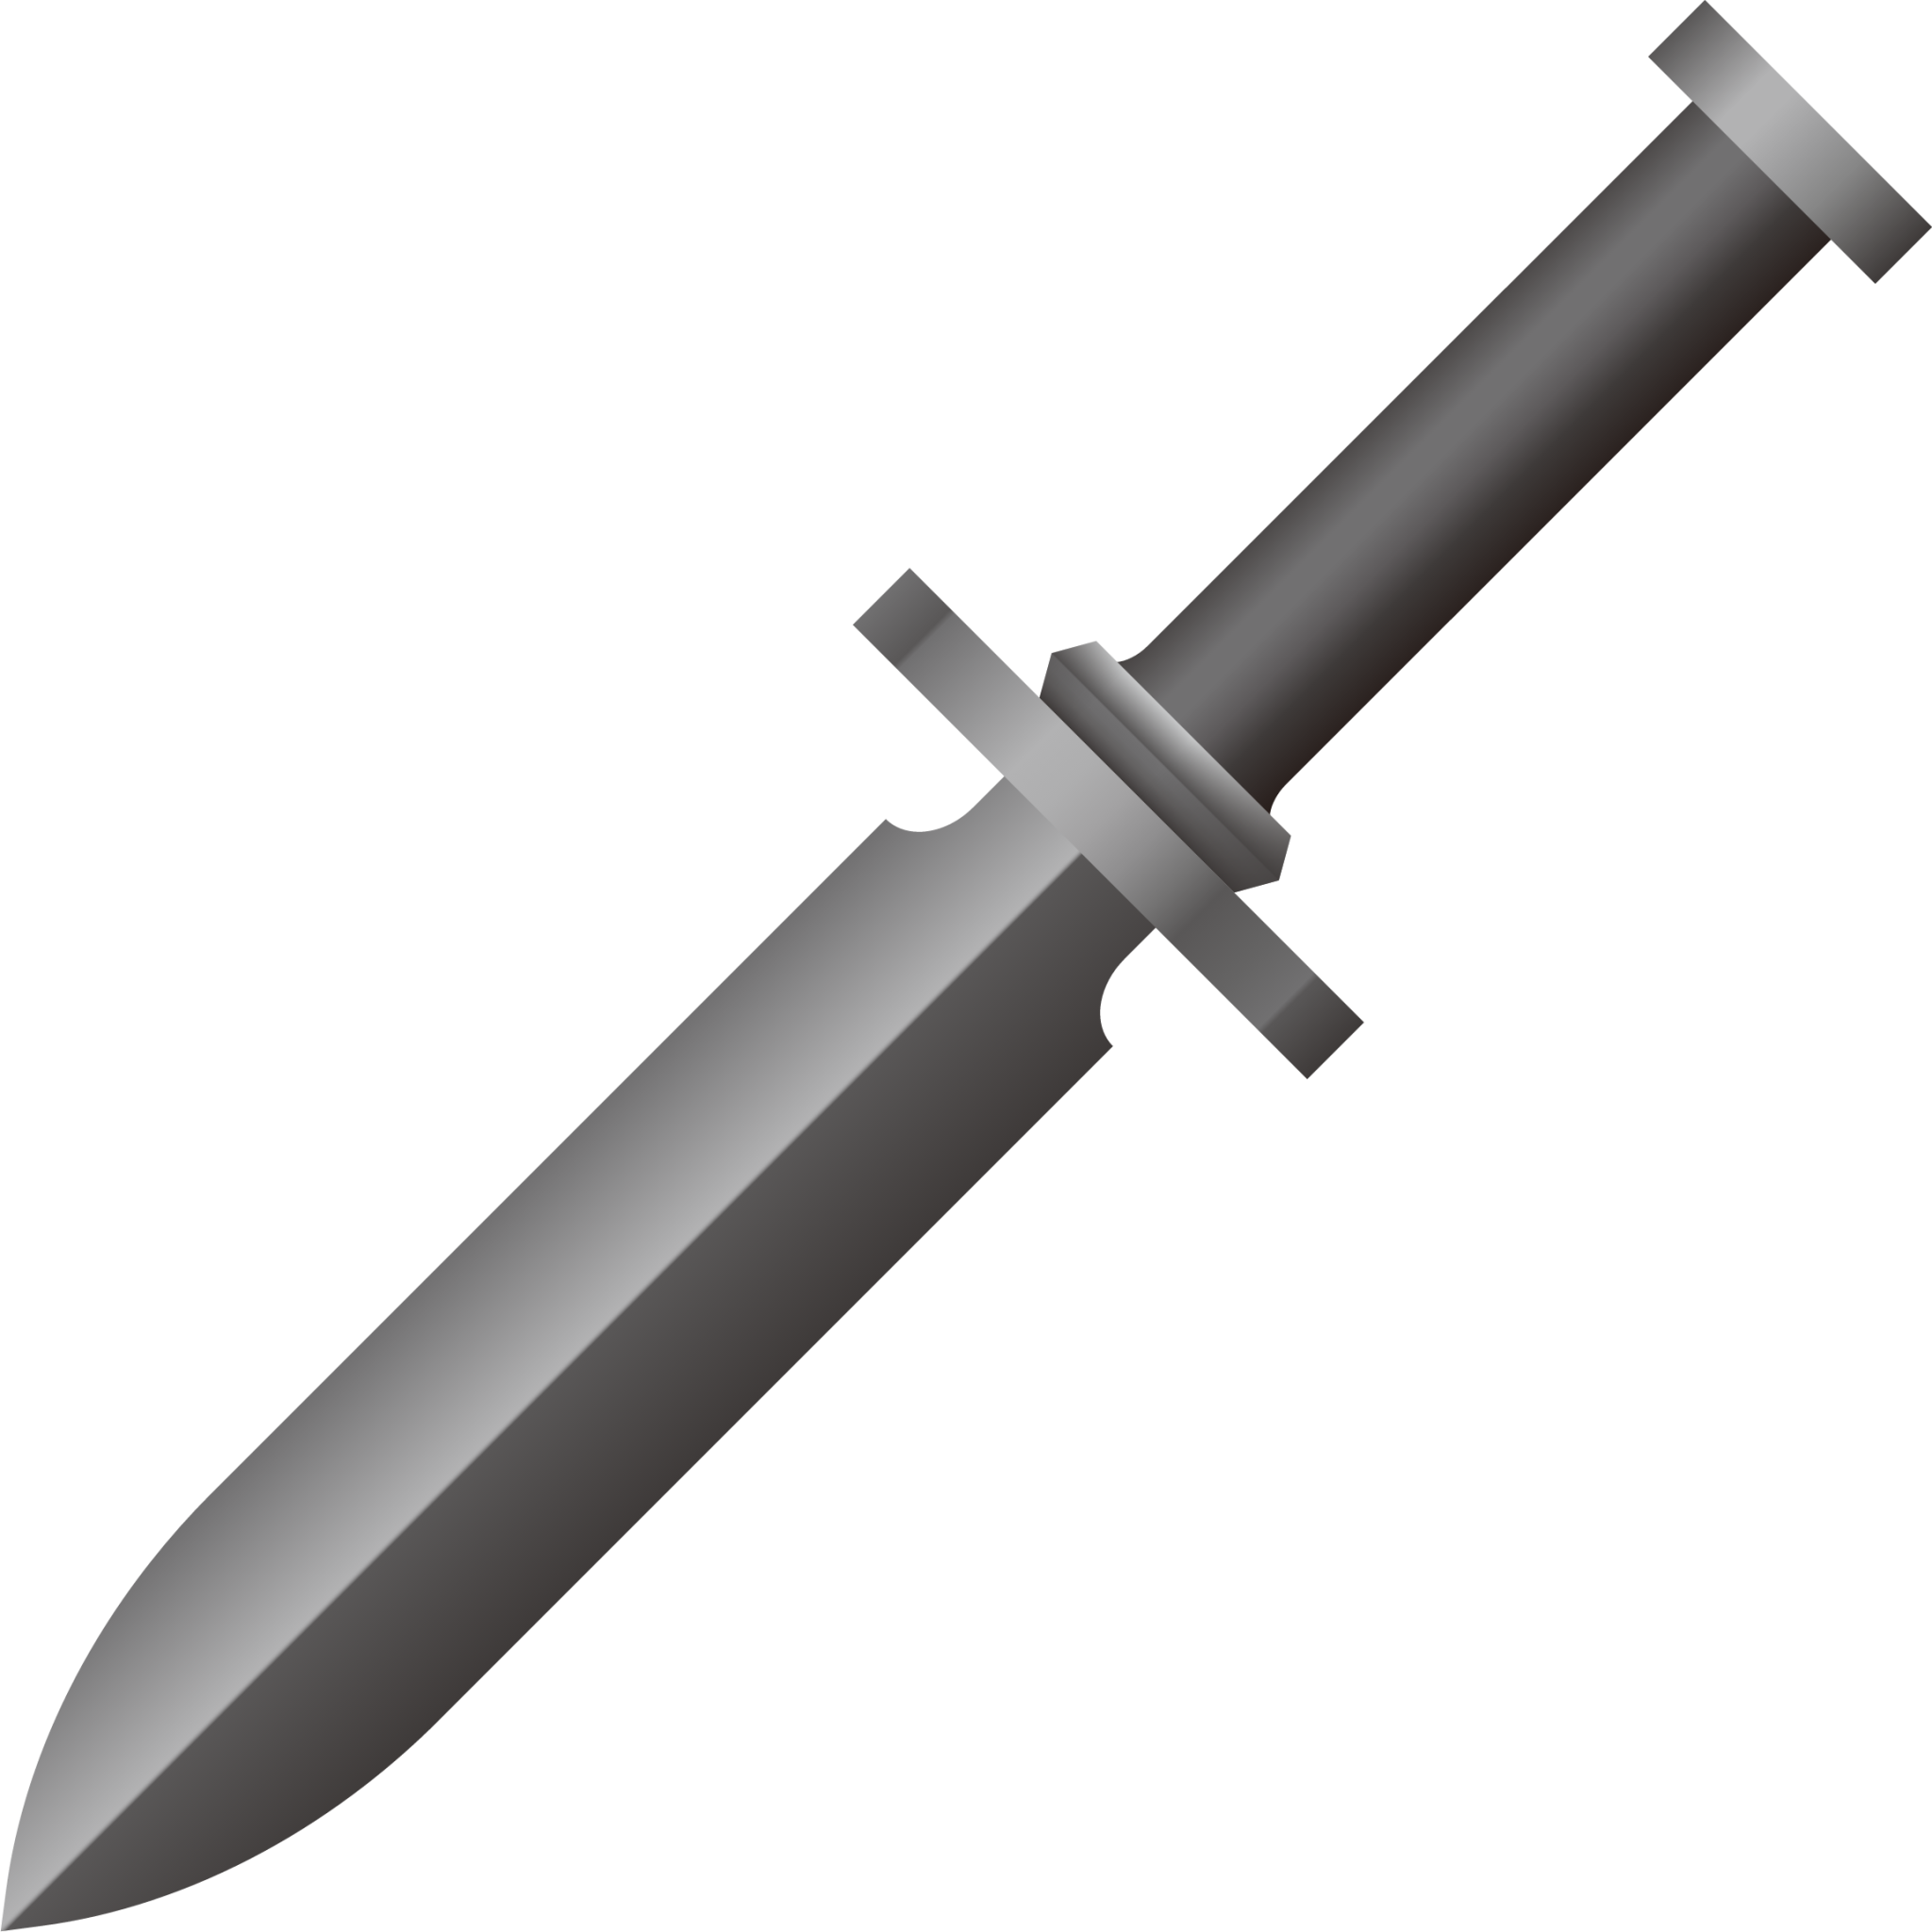 dagger knife emoji